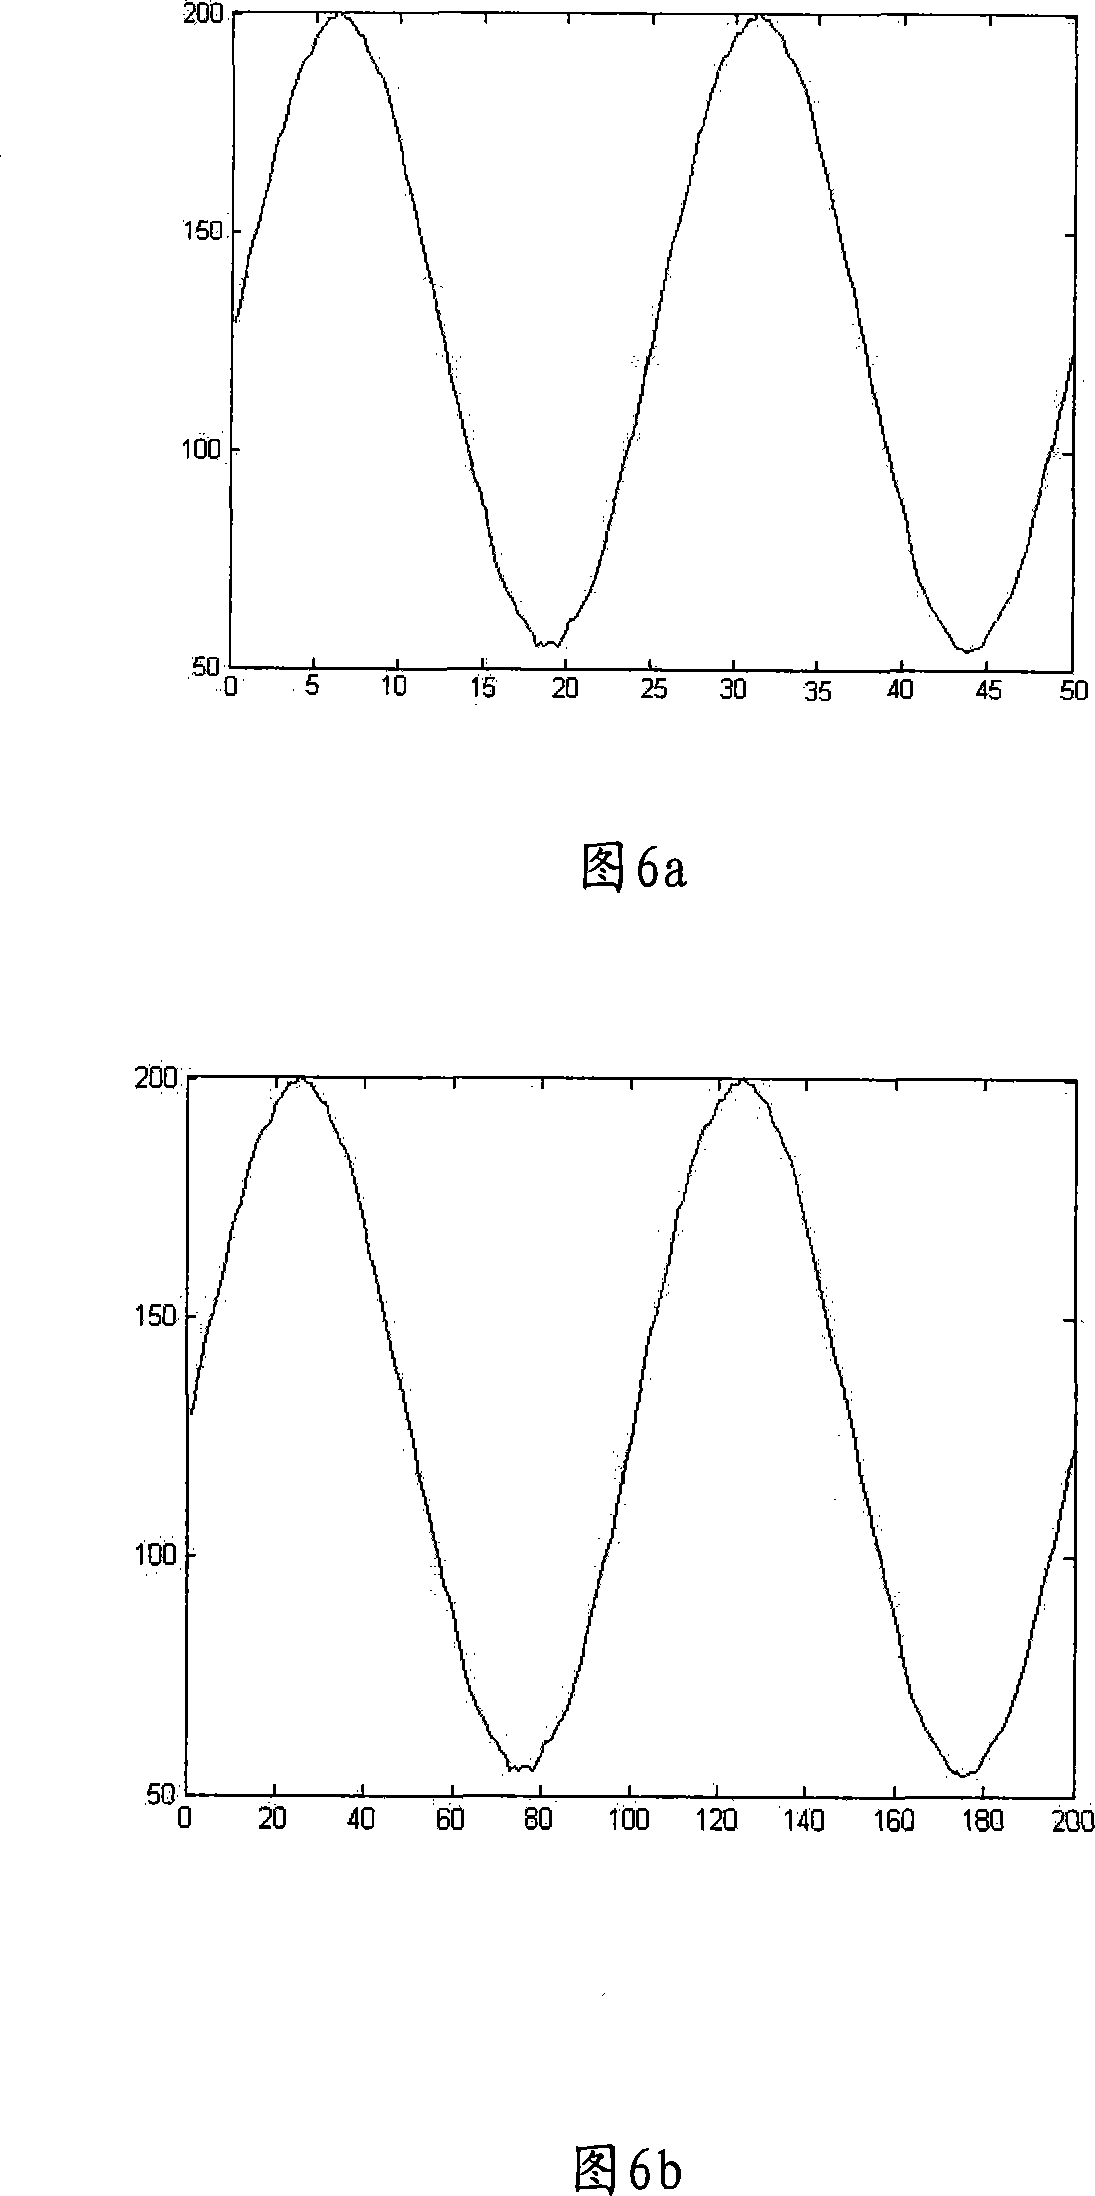 Oscilloscope high speed signal reconstruction method